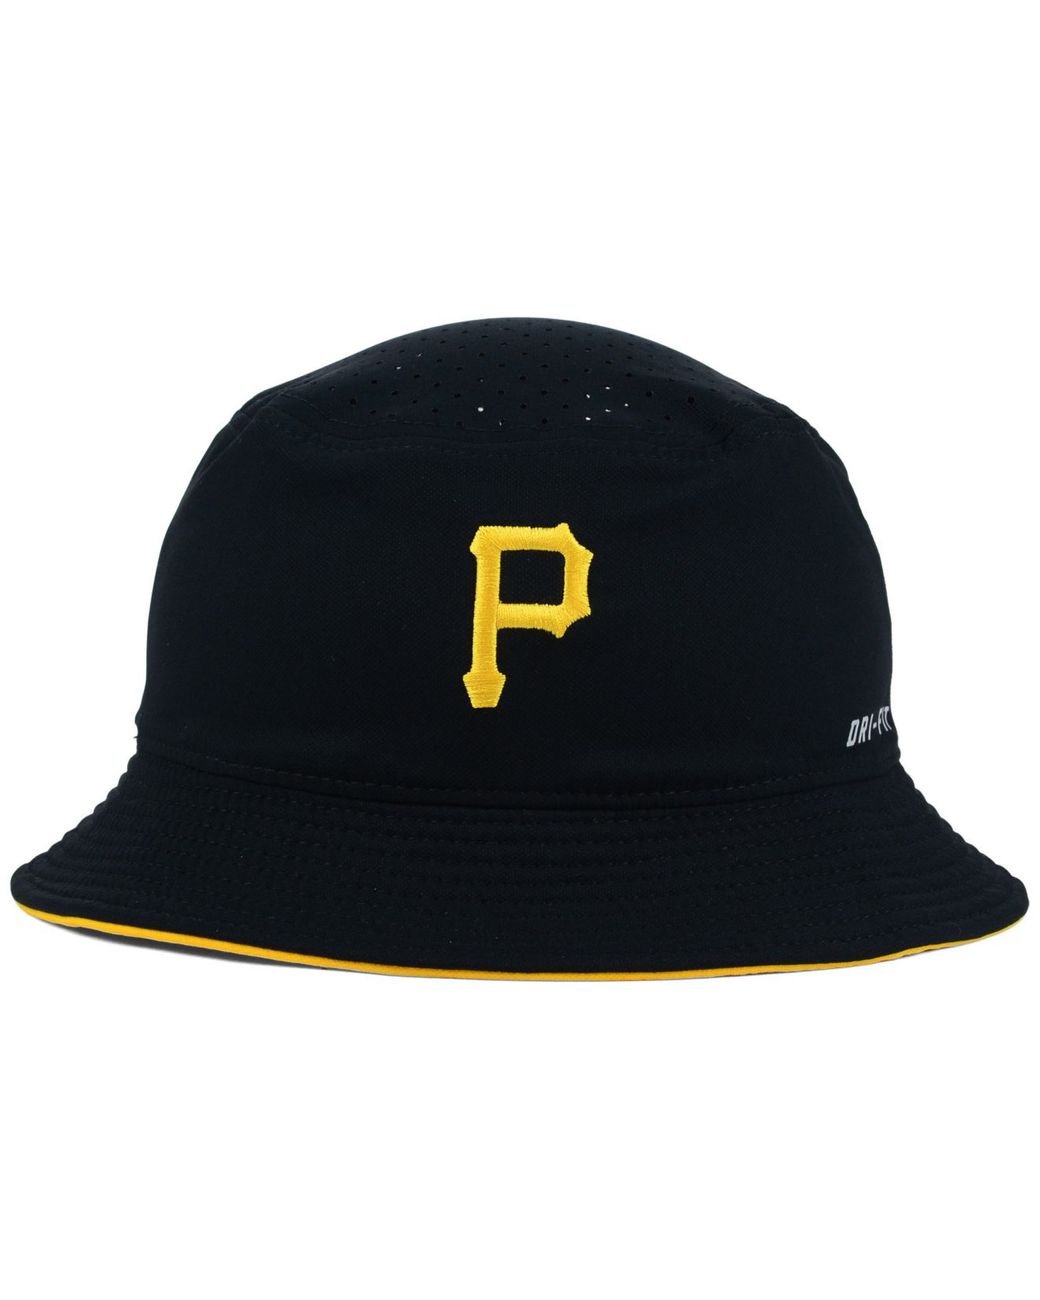 Pittsburgh Pirates Wordmark Men's Nike Dri-FIT MLB Visor.